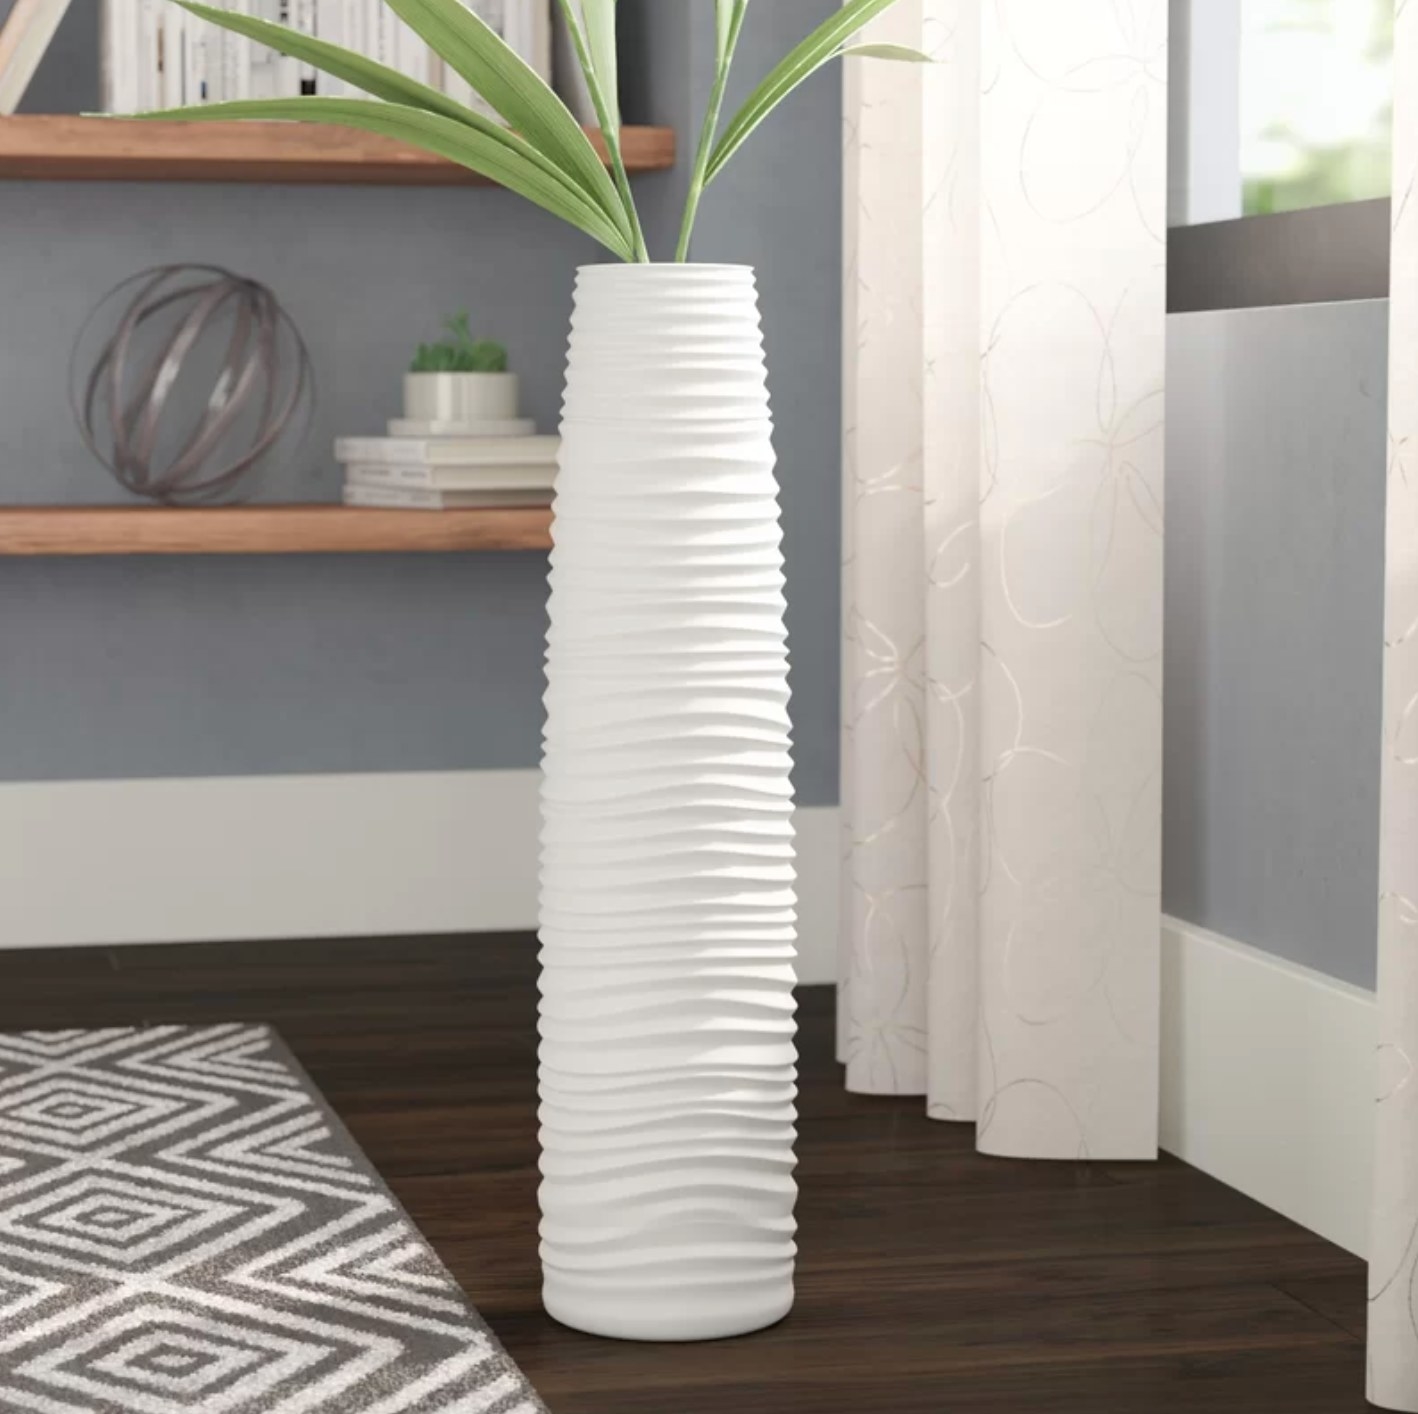 The ceramic floor vase in white